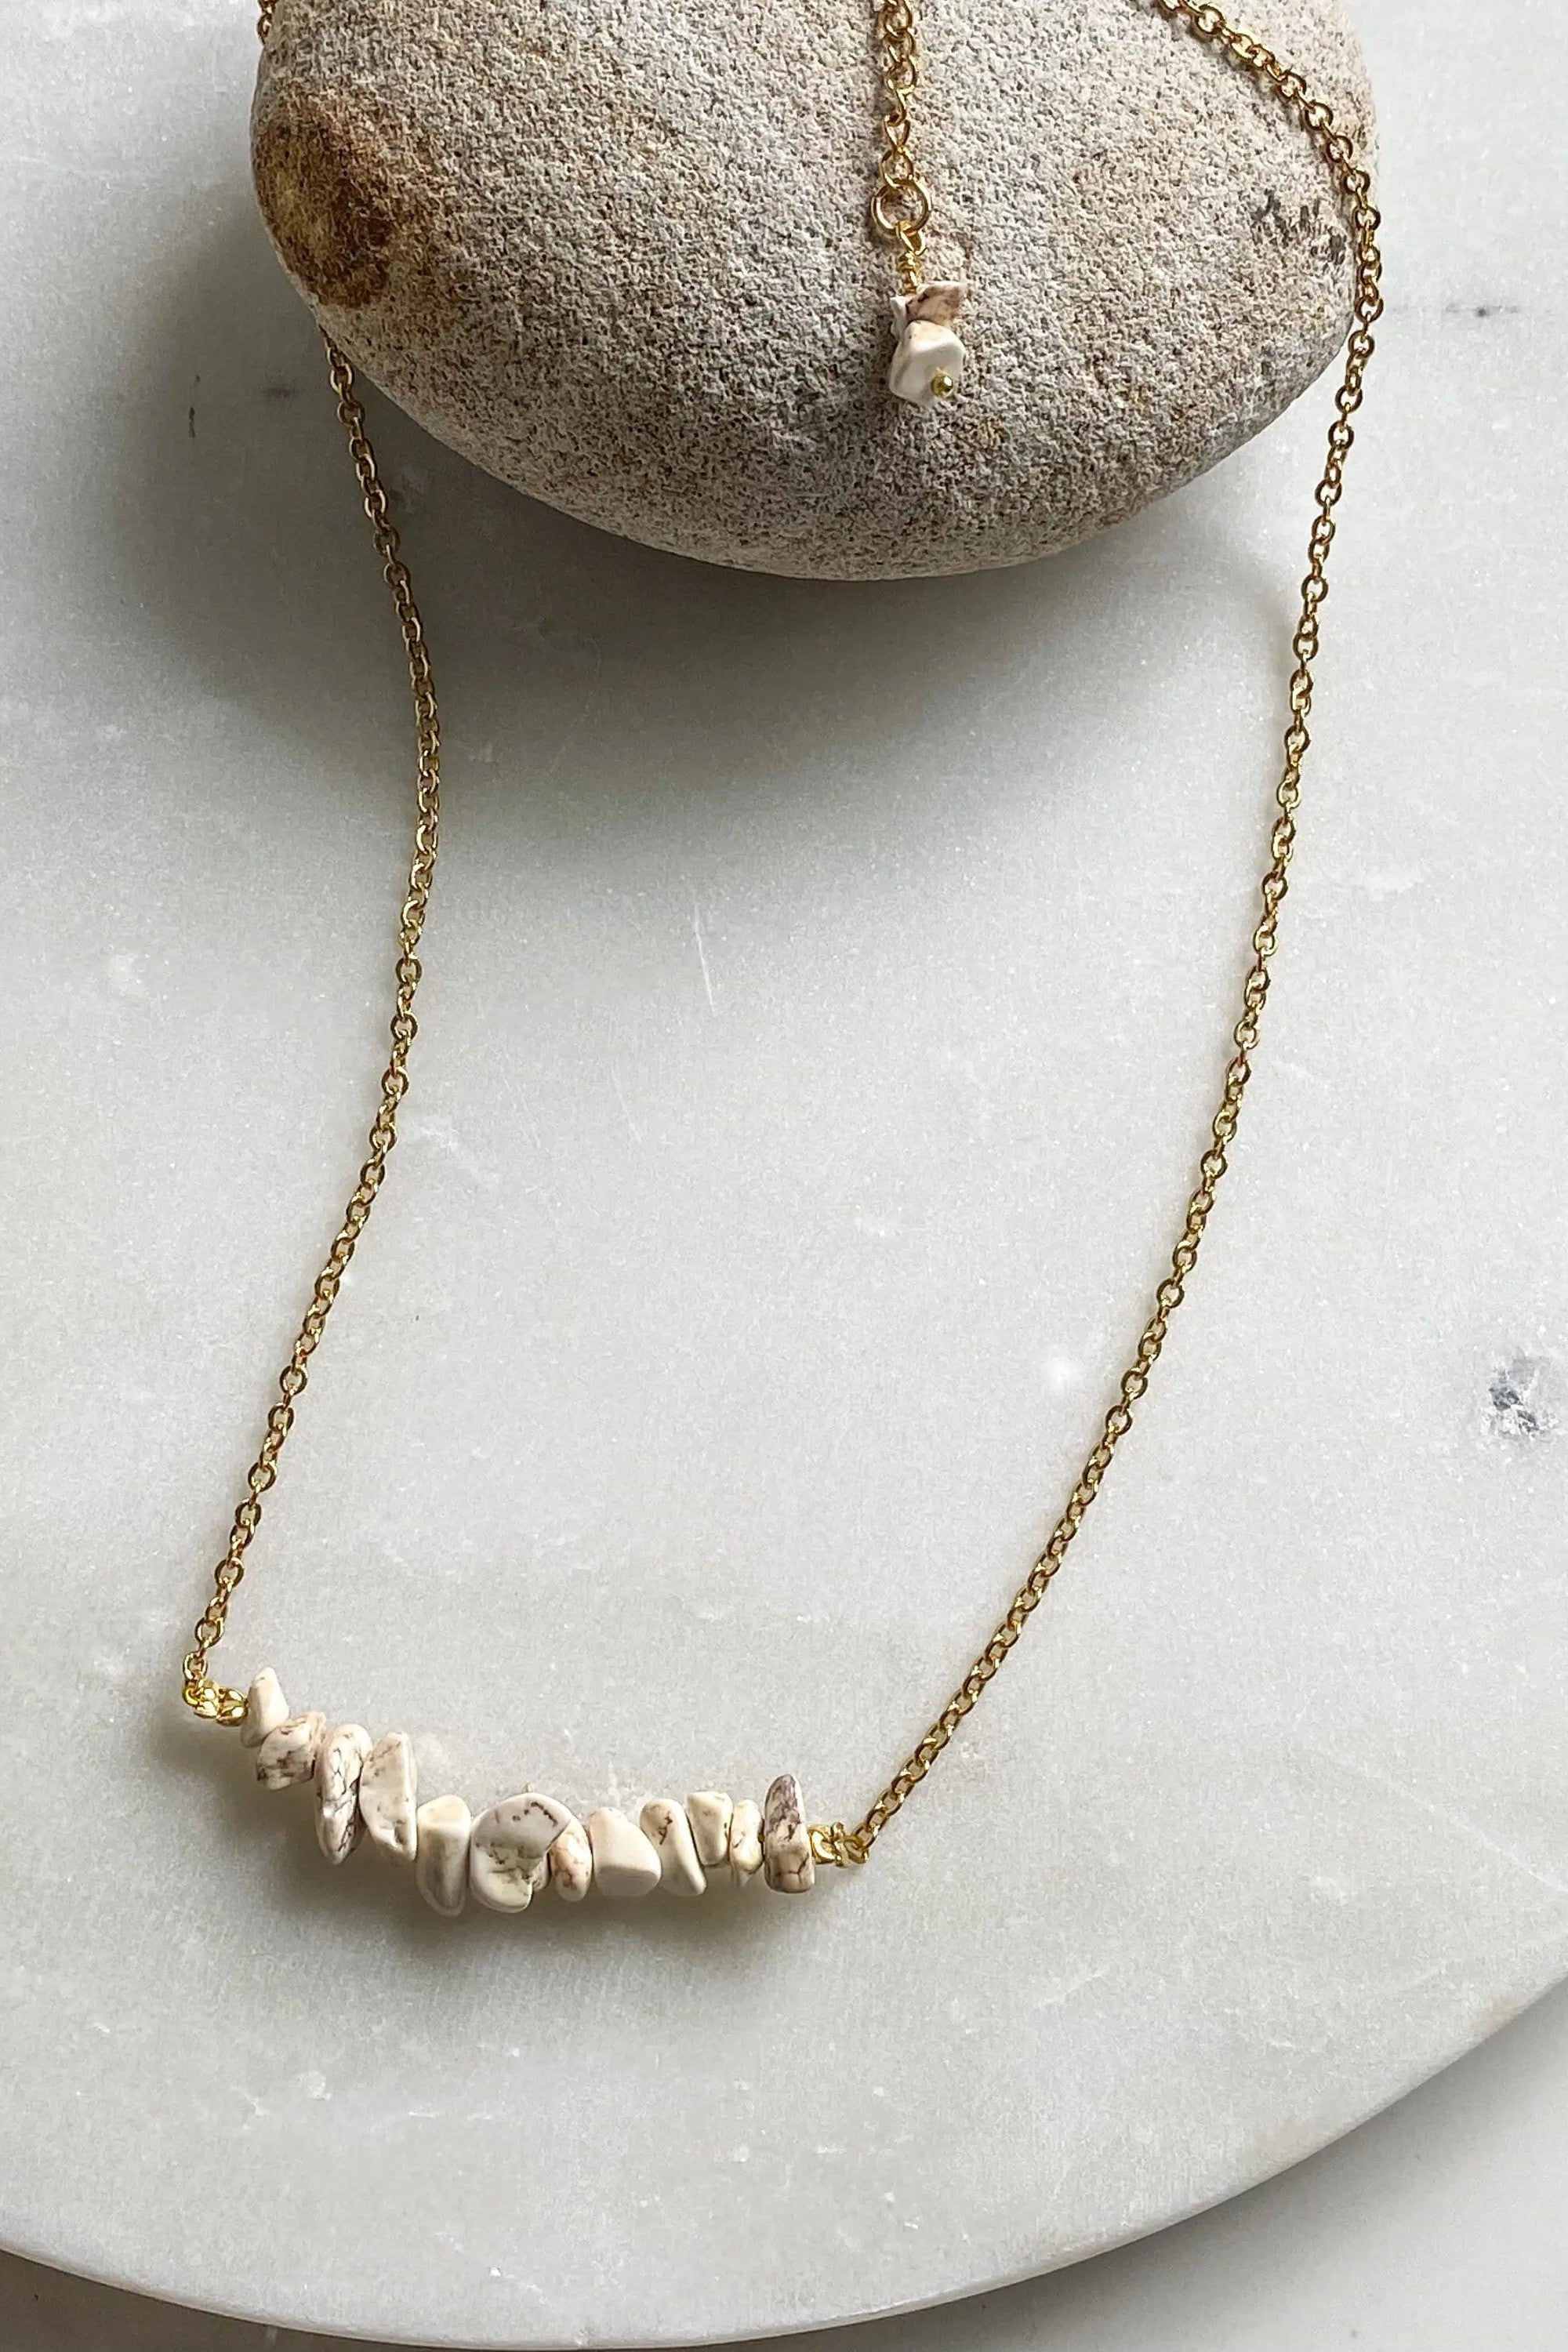 AFRODITA Jade Amethyst Fluorite necklace, Bar elegant necklace, womens jewelry, raw stone necklace, Birthstone gift, Collier Pierres